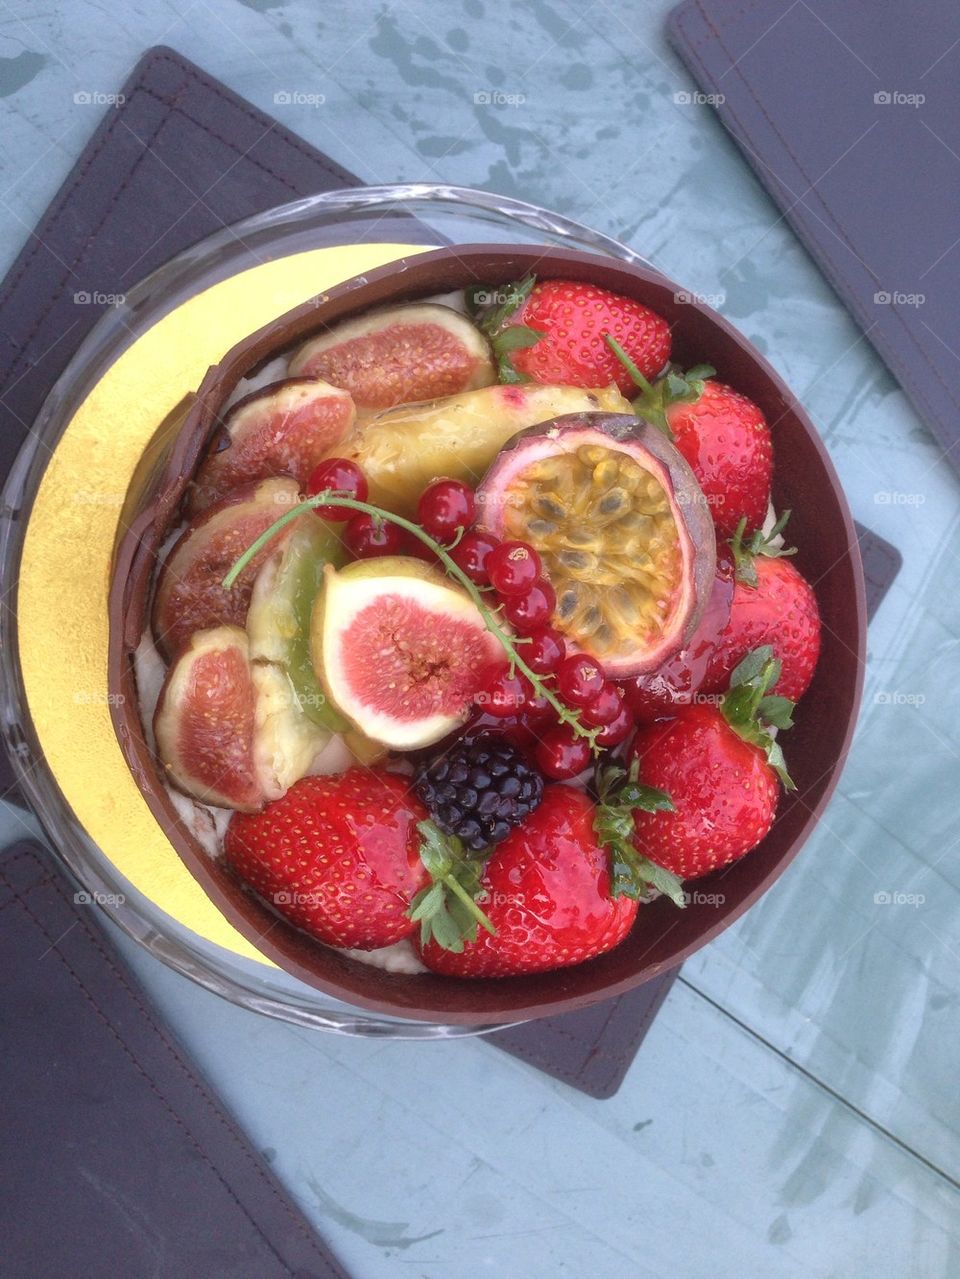 Chocolate Cake with Fruit